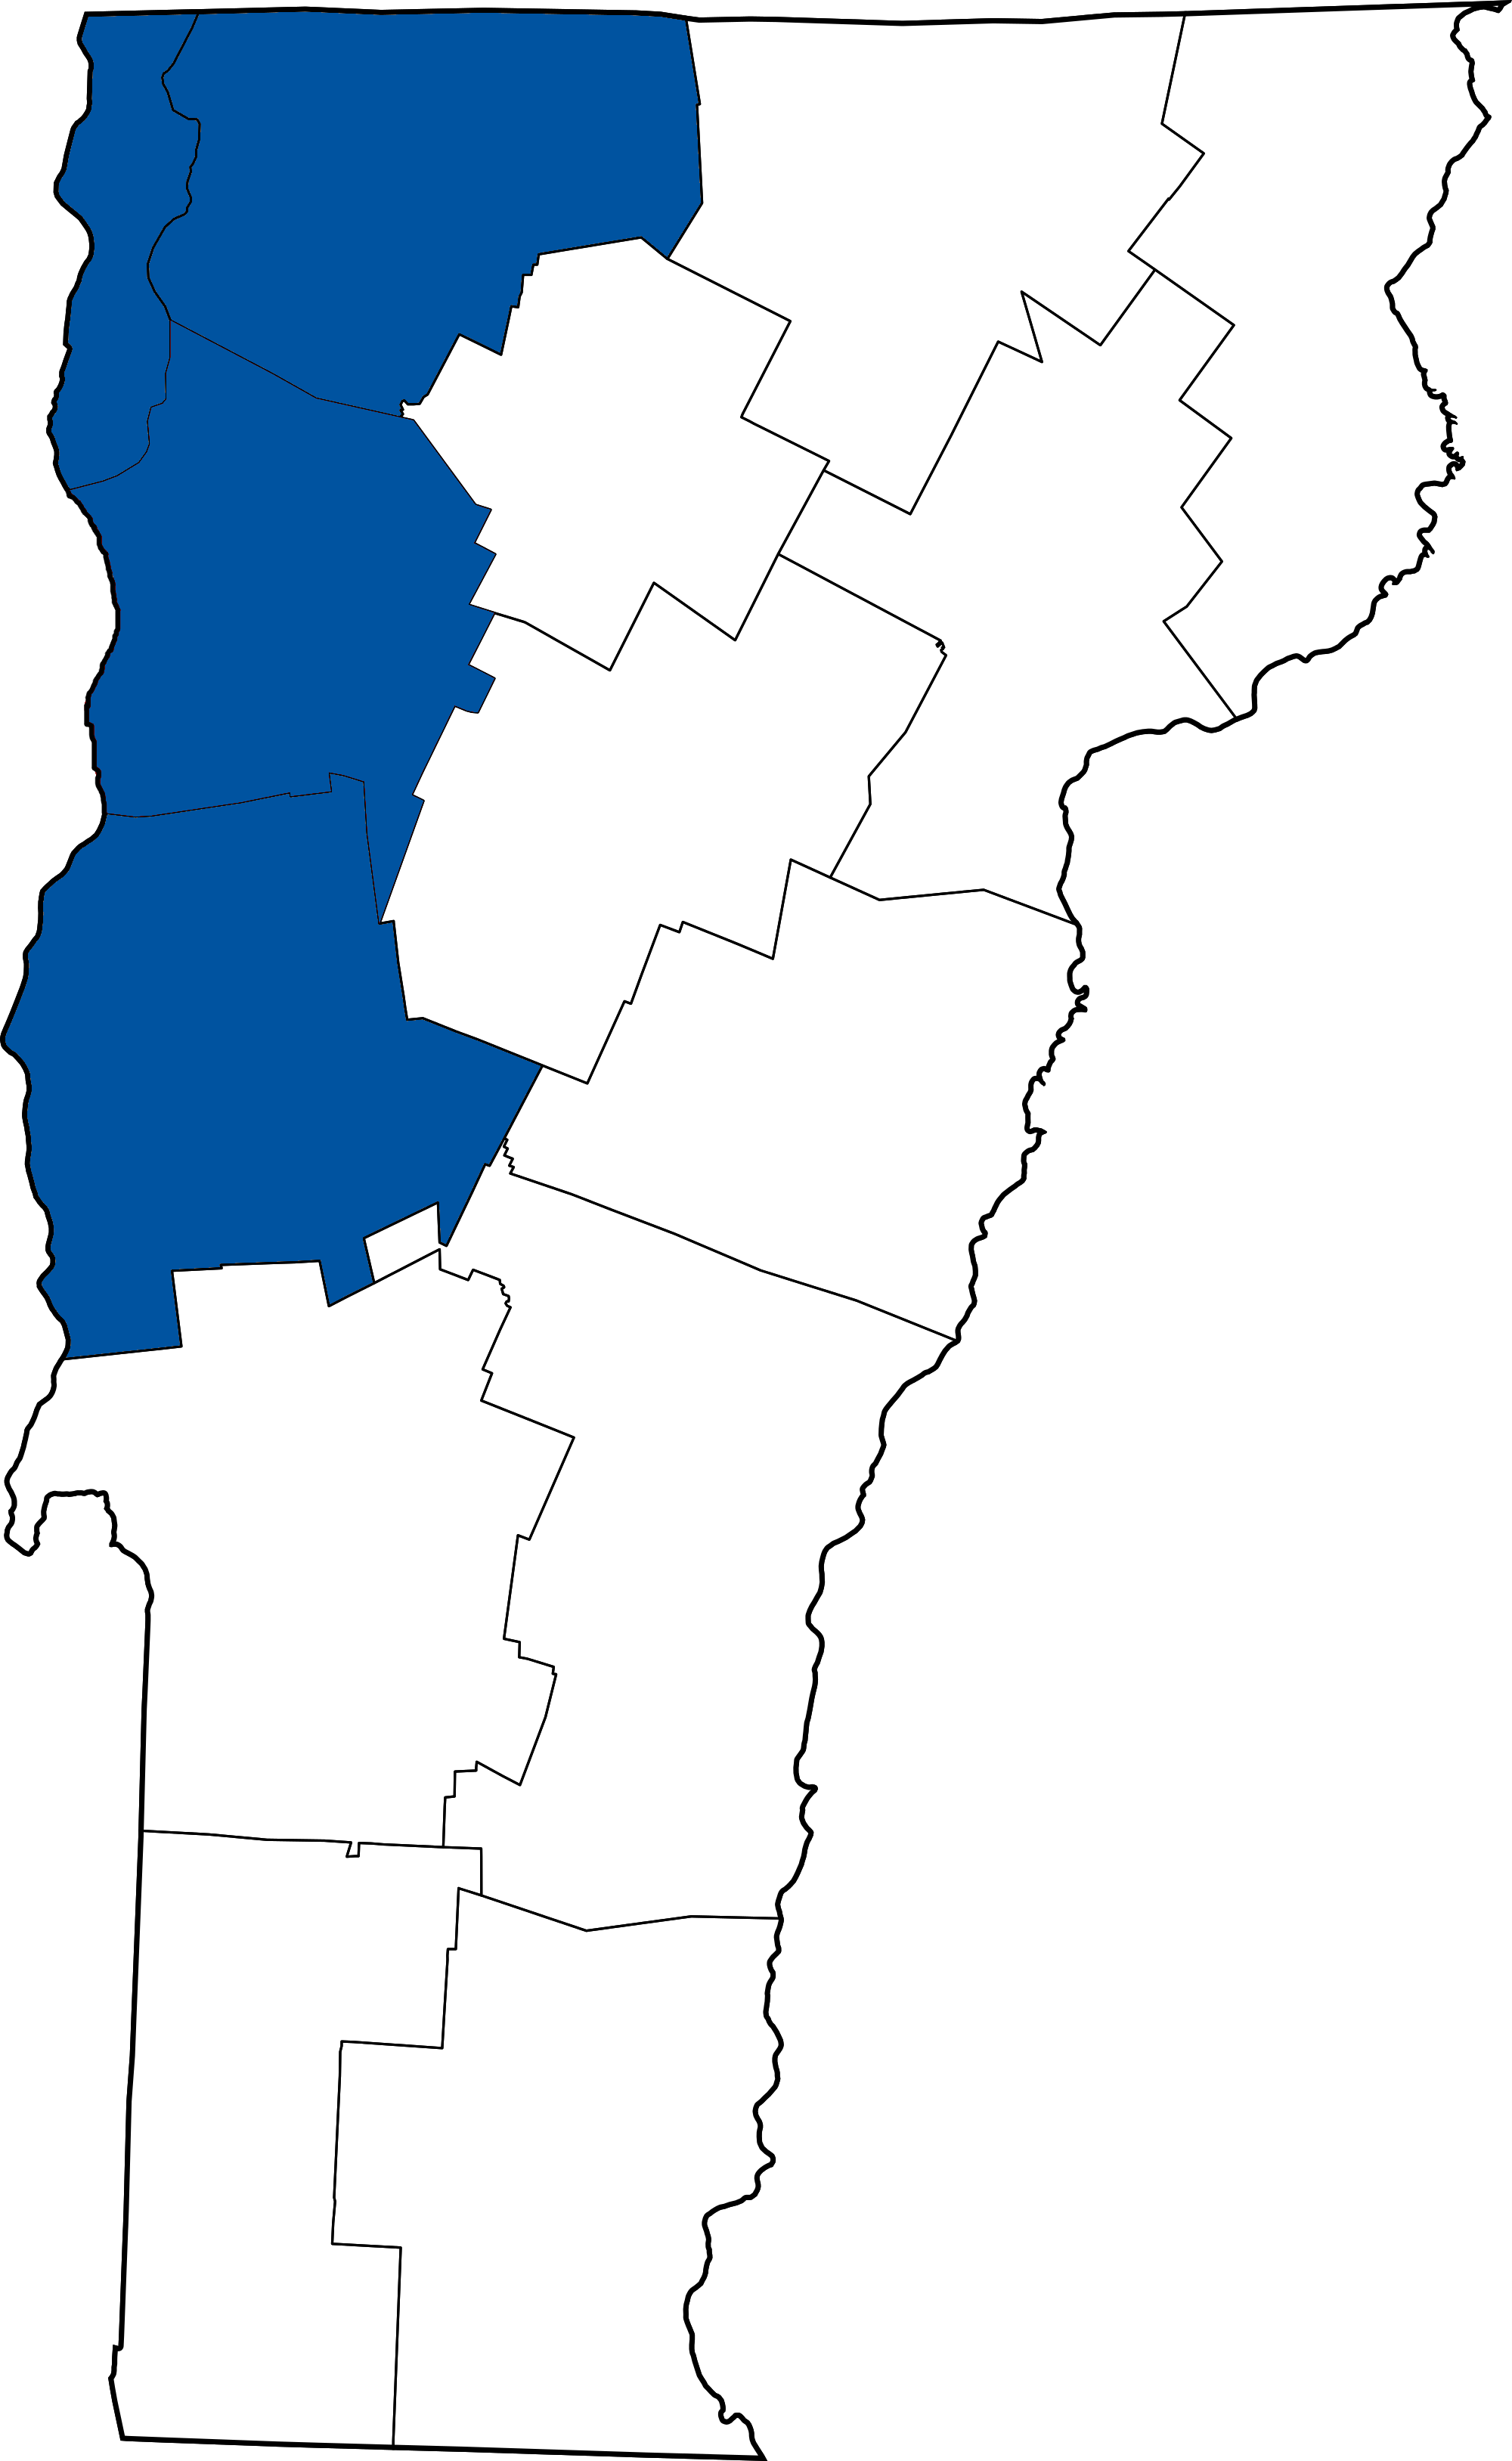 HomeShare Vermont coverage area